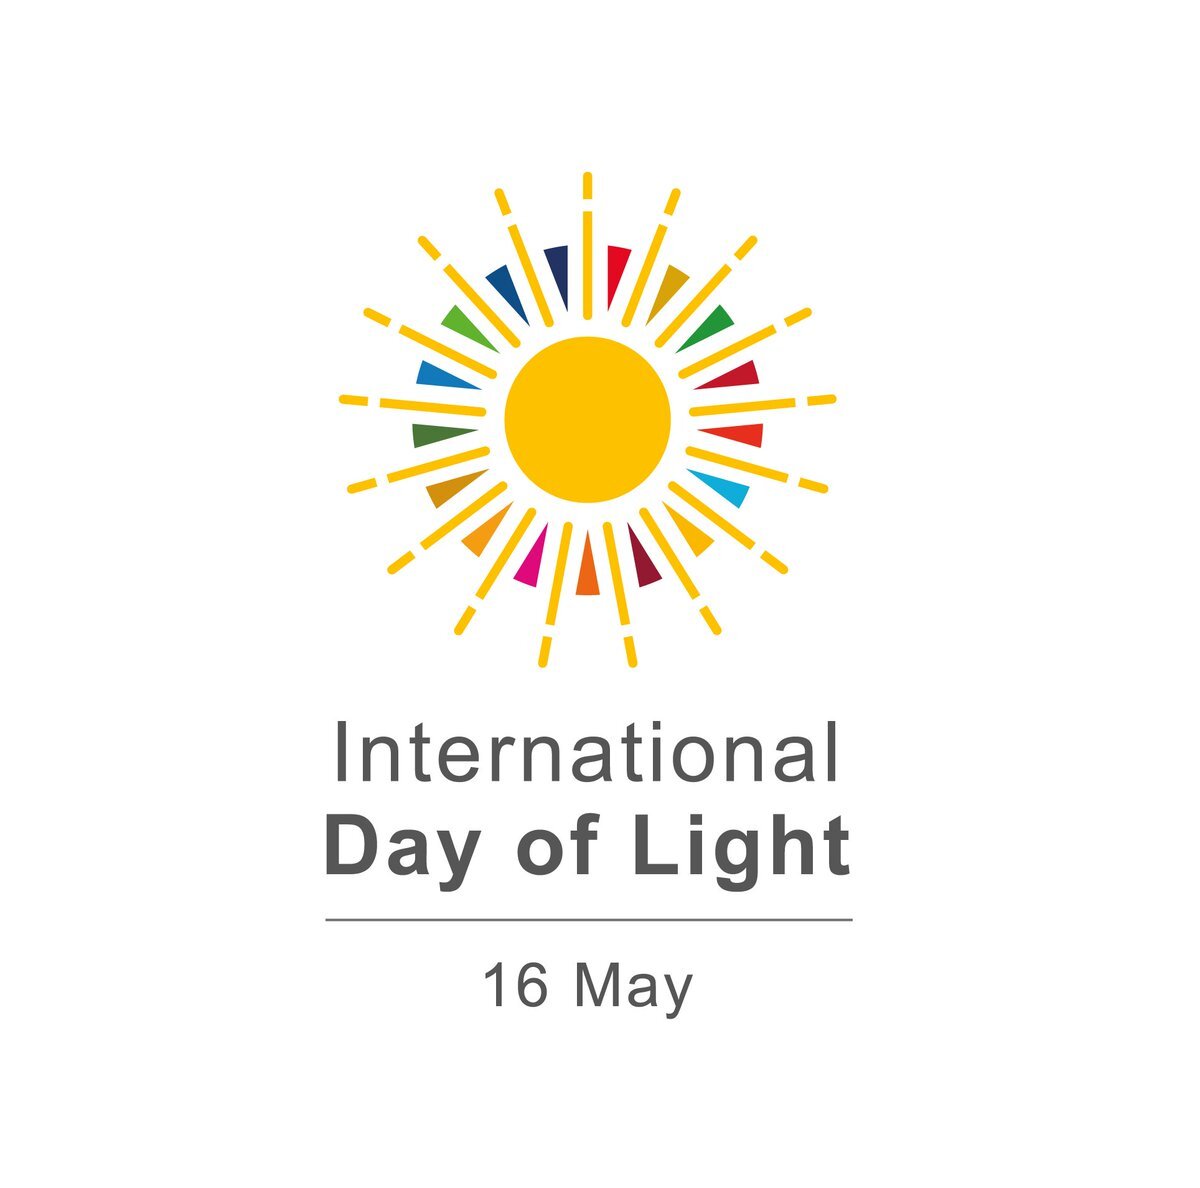 International Day of Light | May 16, 2018